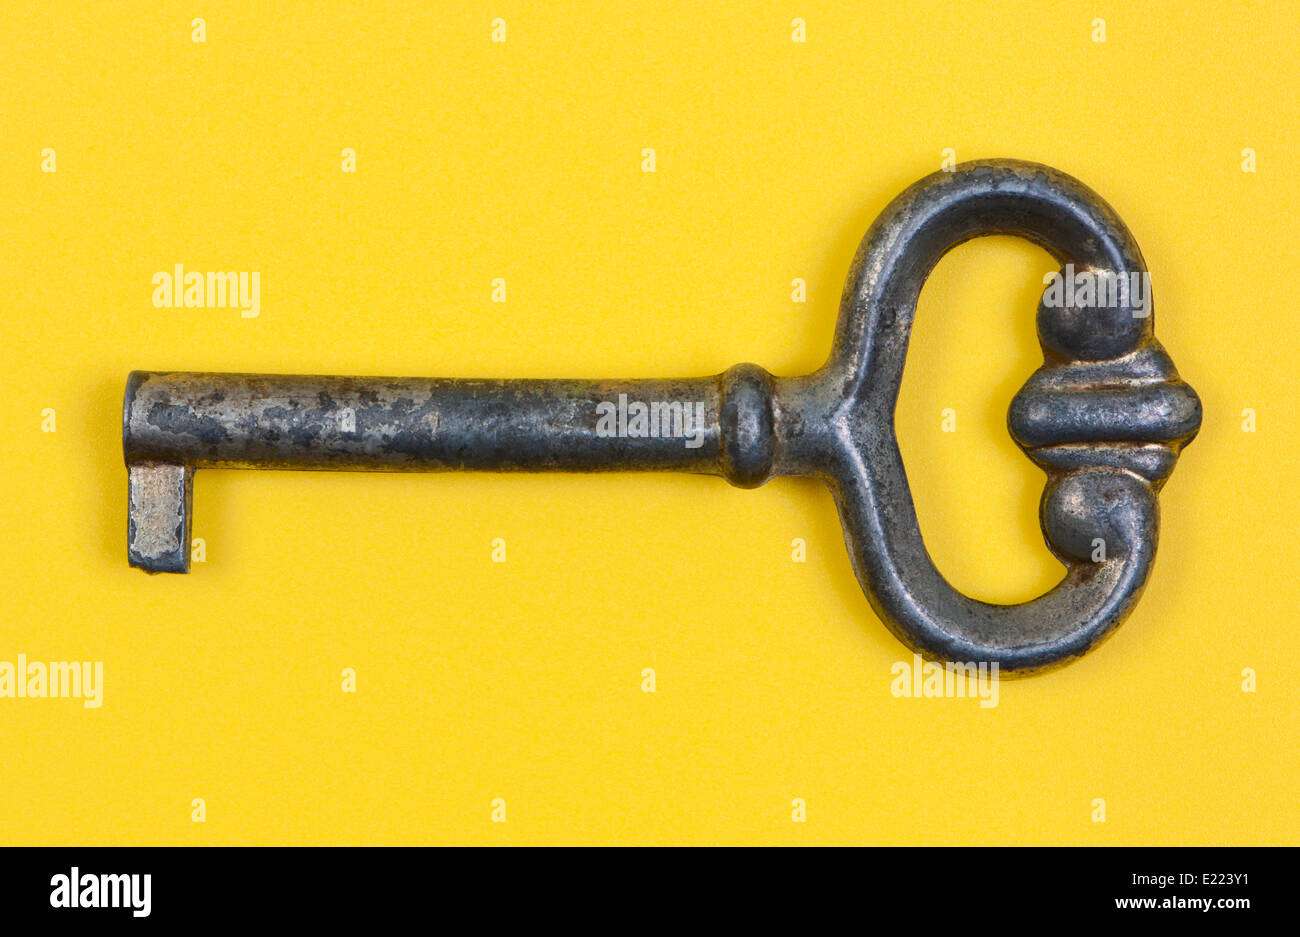 Antique key close-up on yellow background. Stock Photo